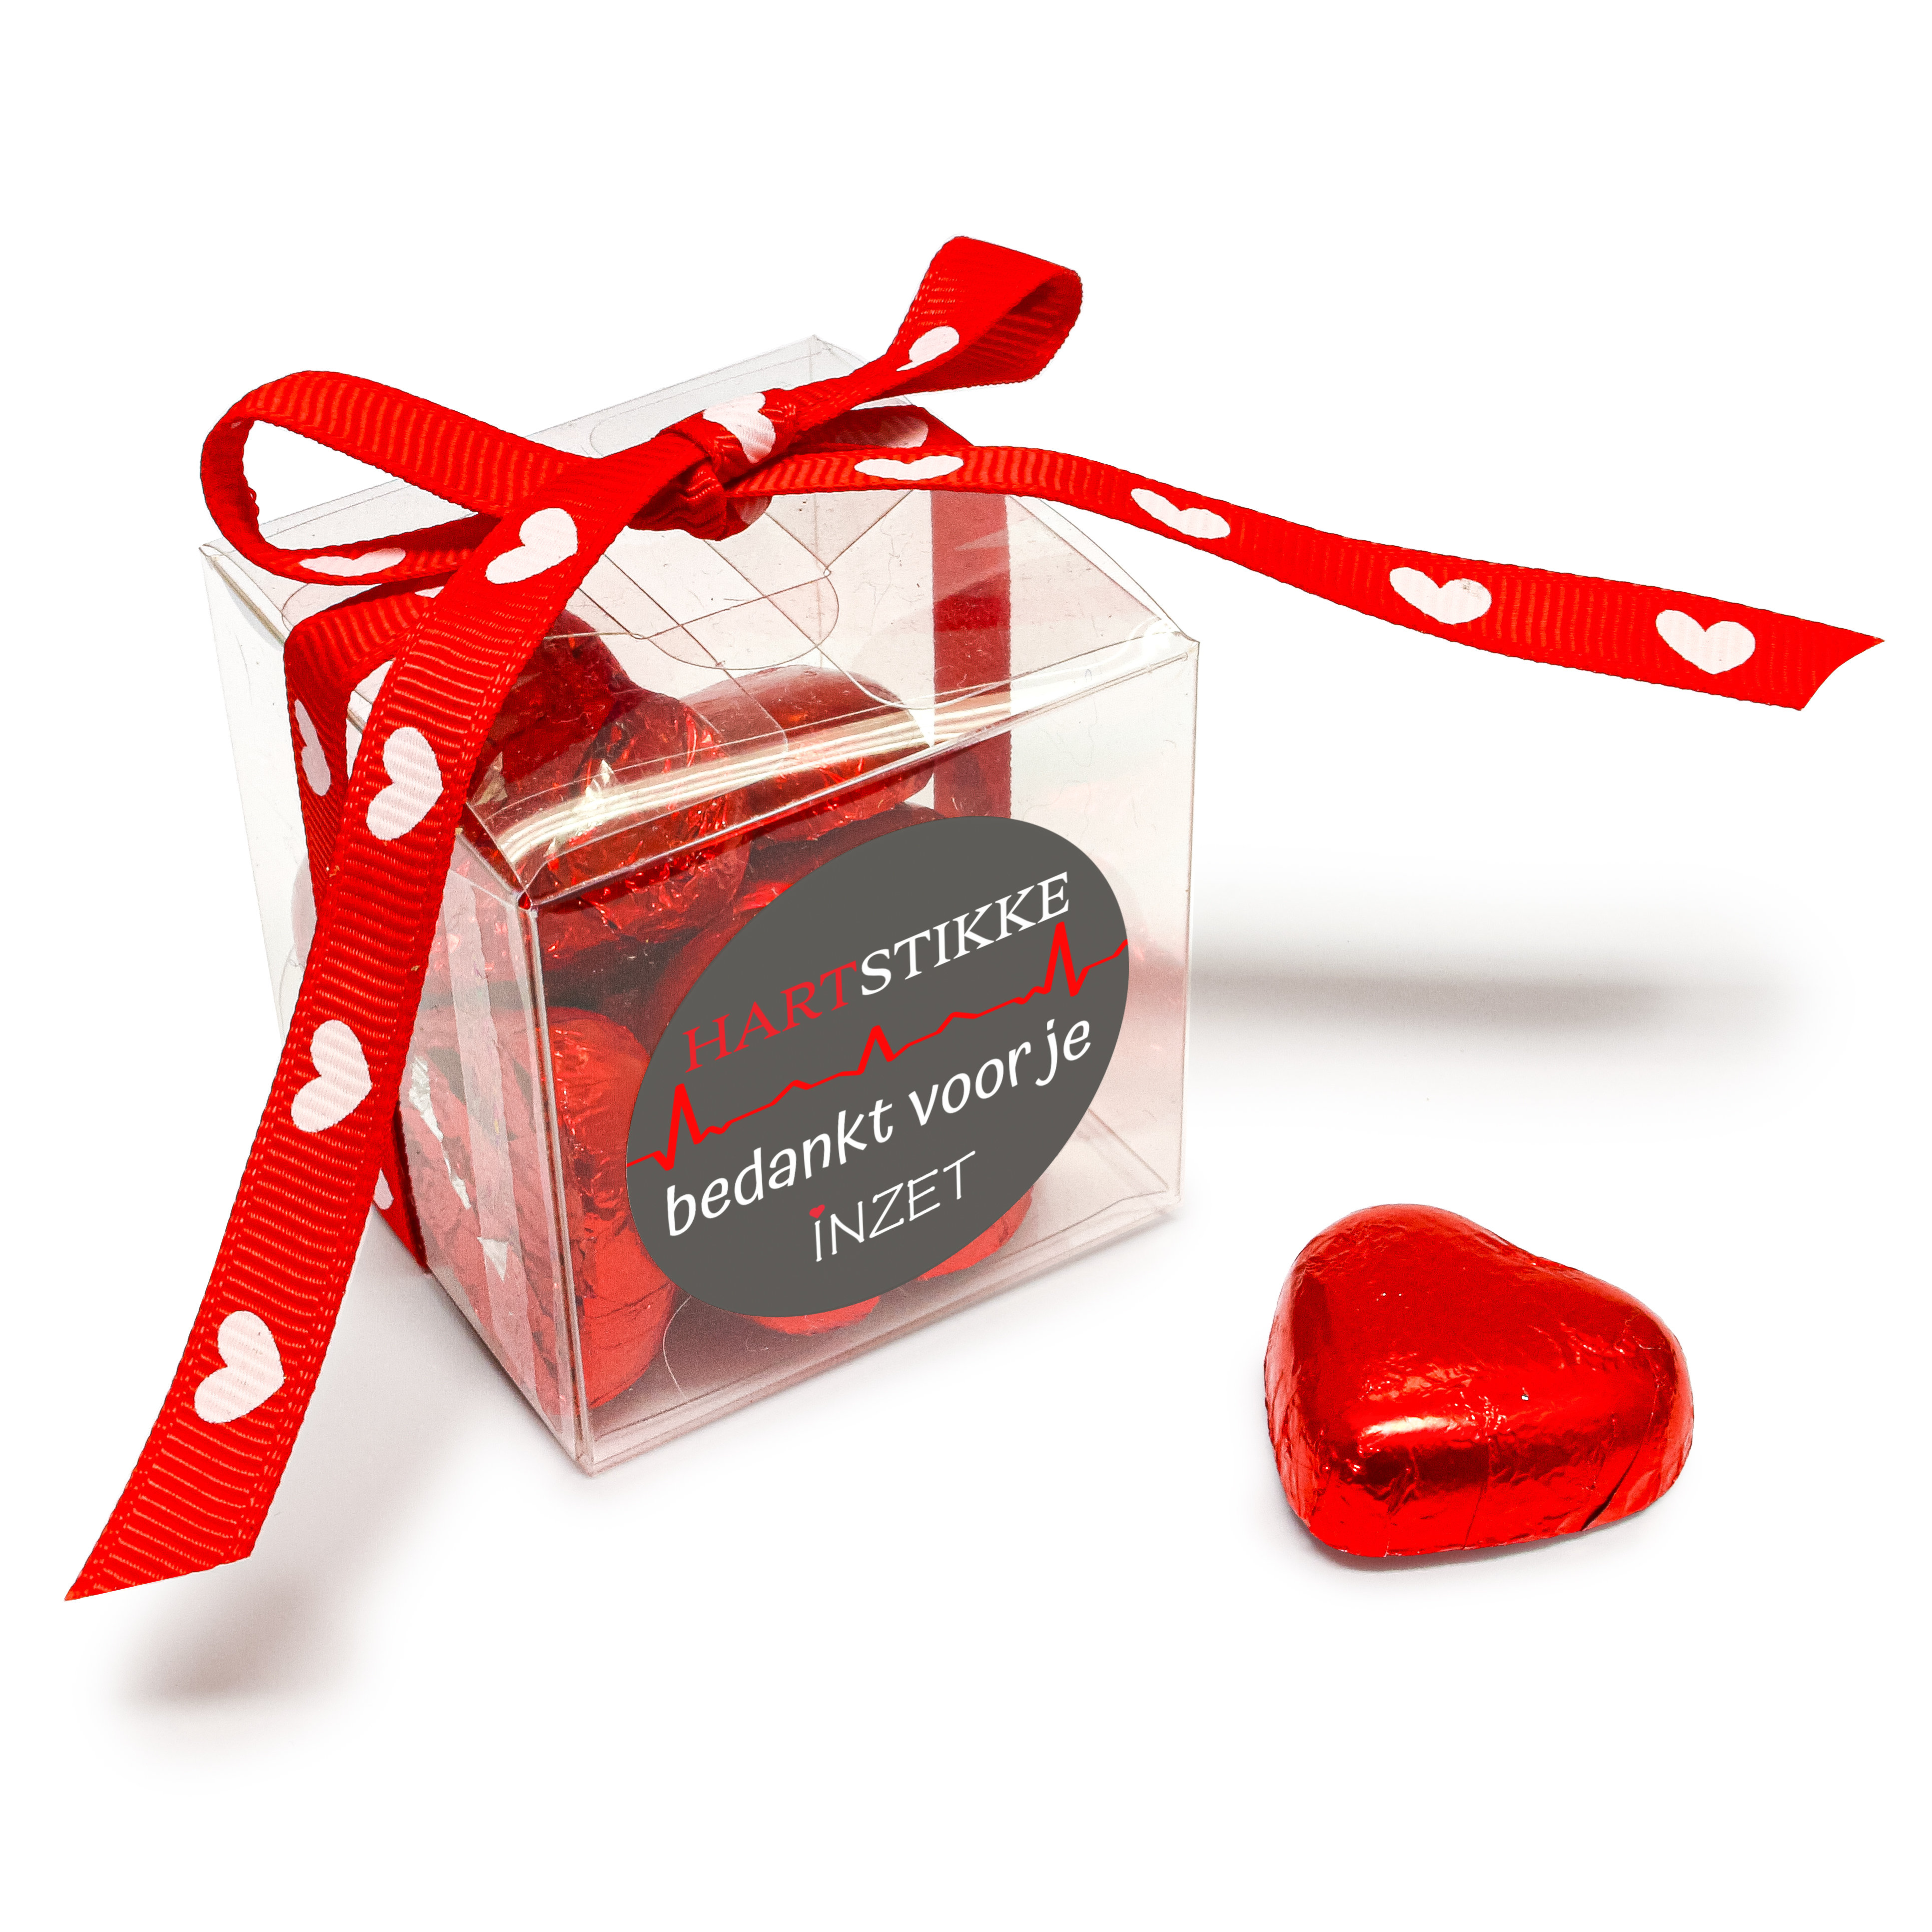 Hartjes bedankje - Transparante kubus met hartjes bonbons